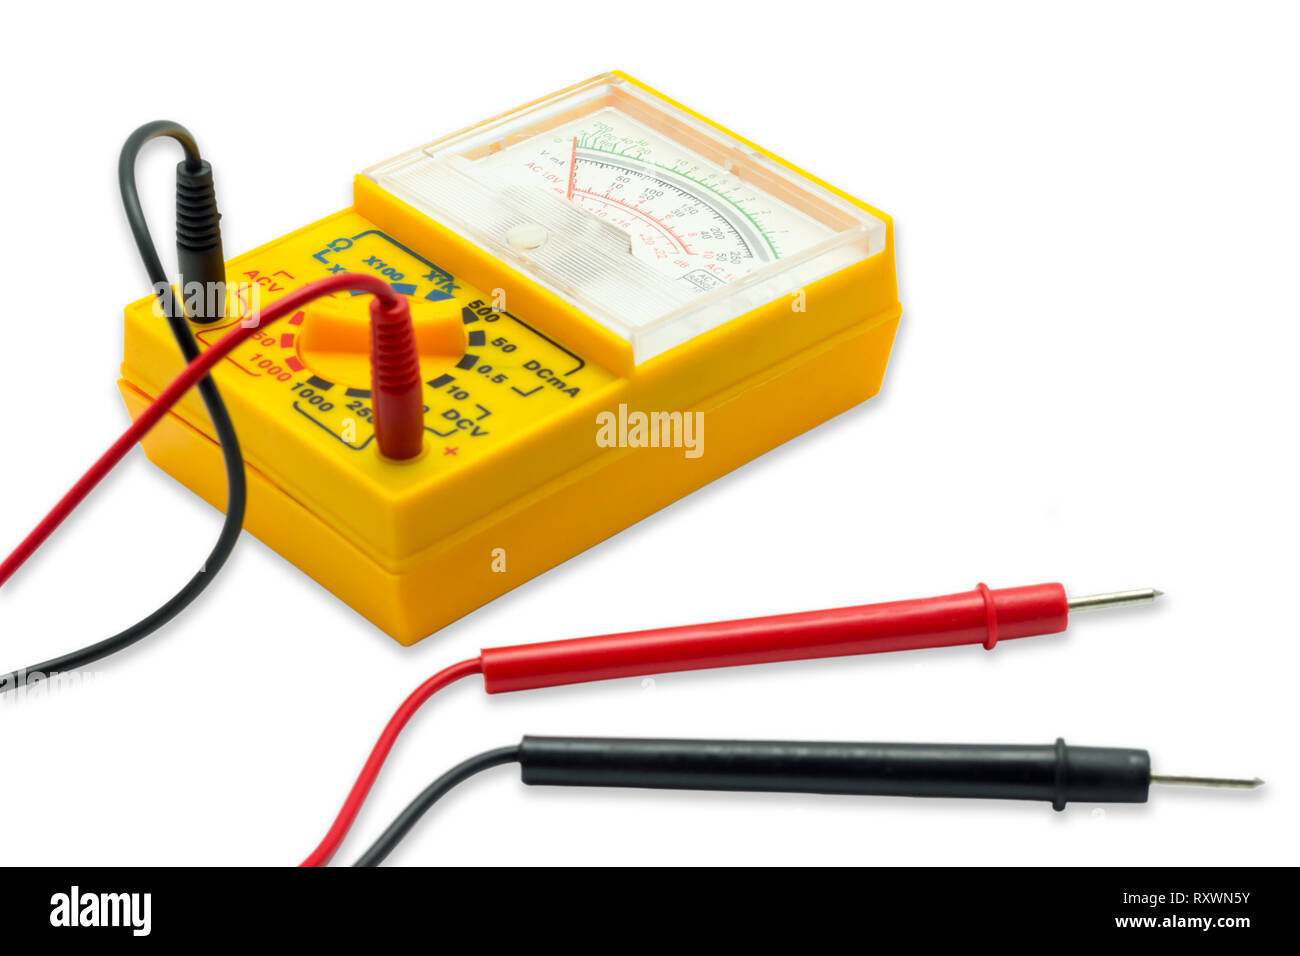 Yellow AC DC Analog Multimeter on white background. Stock Photo